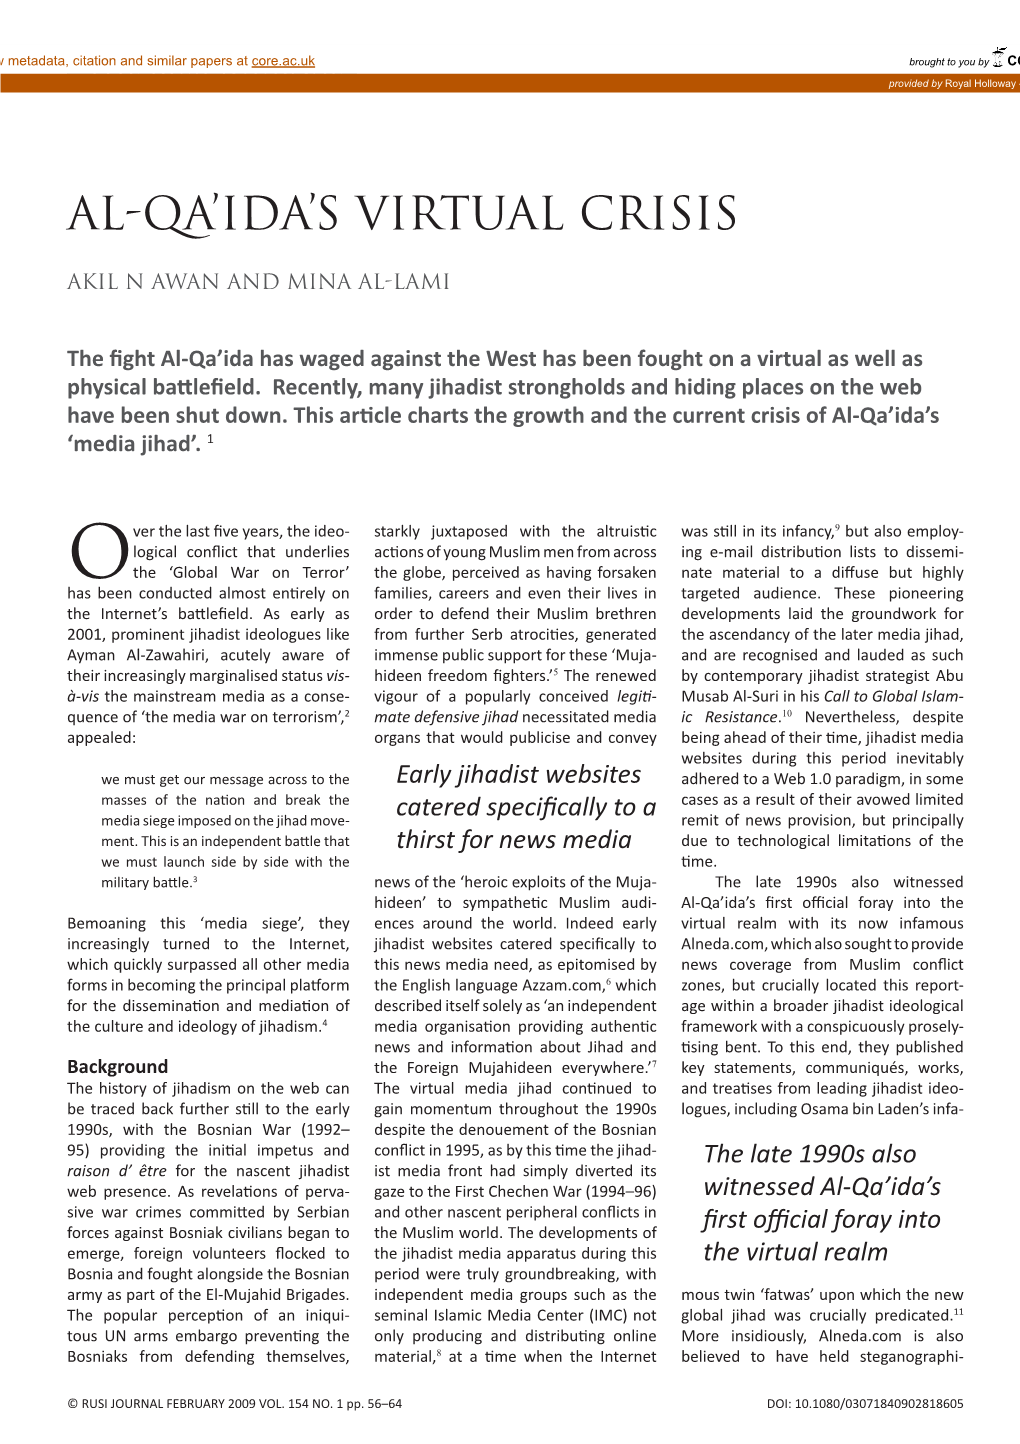 Al-Qa'ida's Virtual Crisis